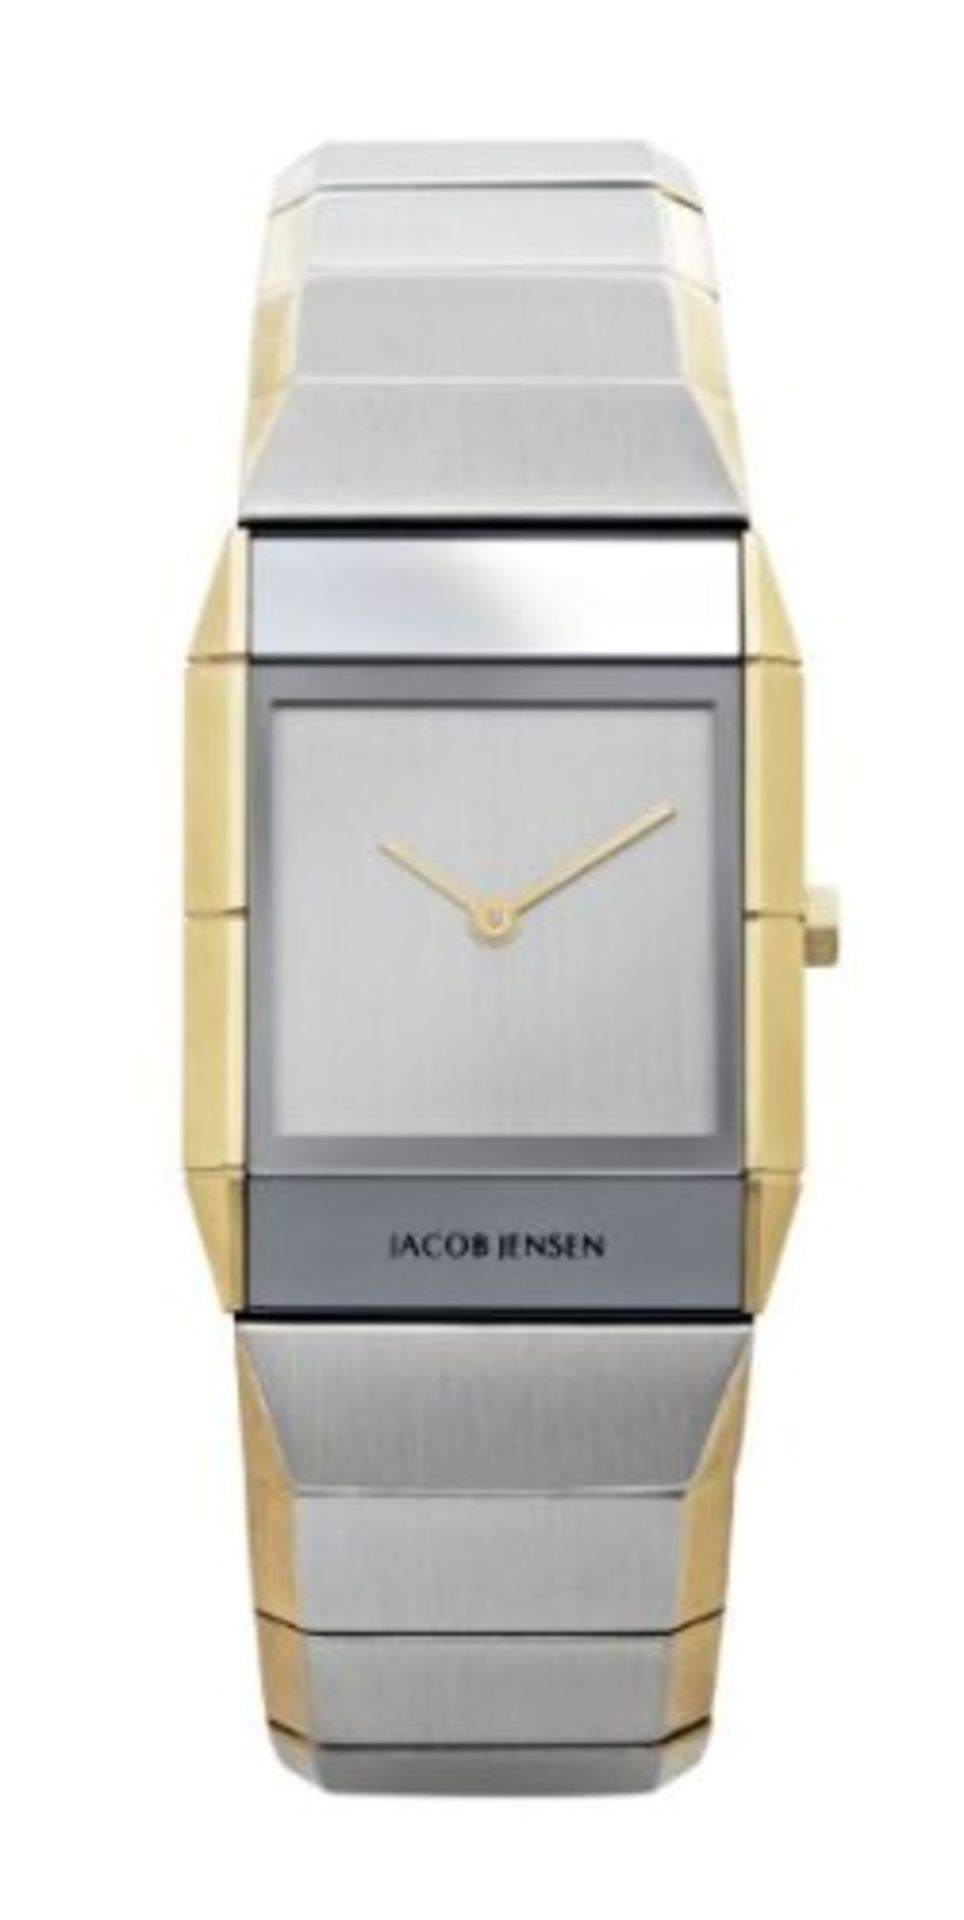 Jacob Jensen Sapphire Series Women's Quartz Watch with Silver Dial - RRP £499